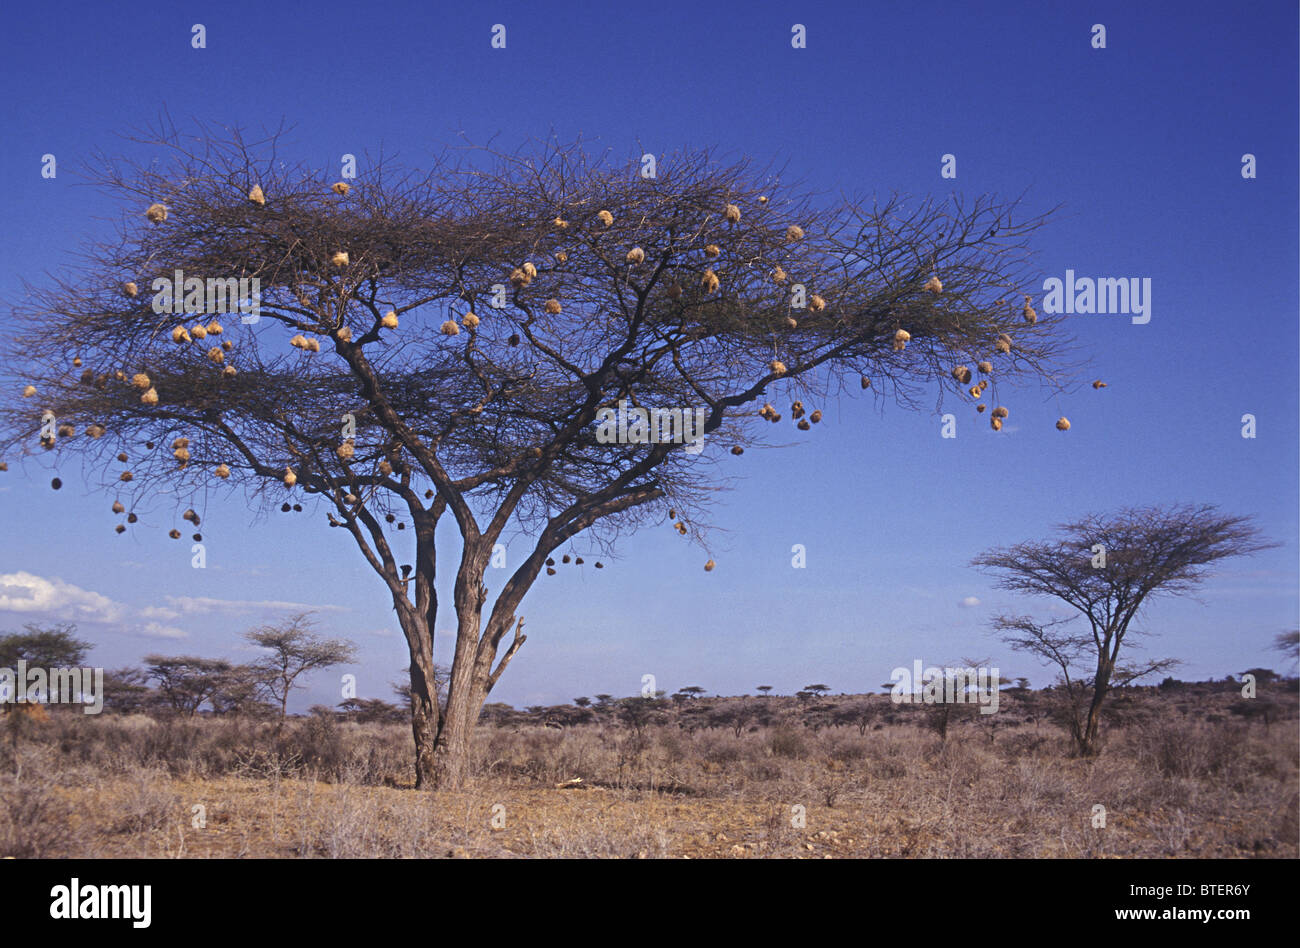 Acacia Tortilis tree with nests of Black Capped Social Weavers Samburu National Reserve Kenya East Africa Stock Photo